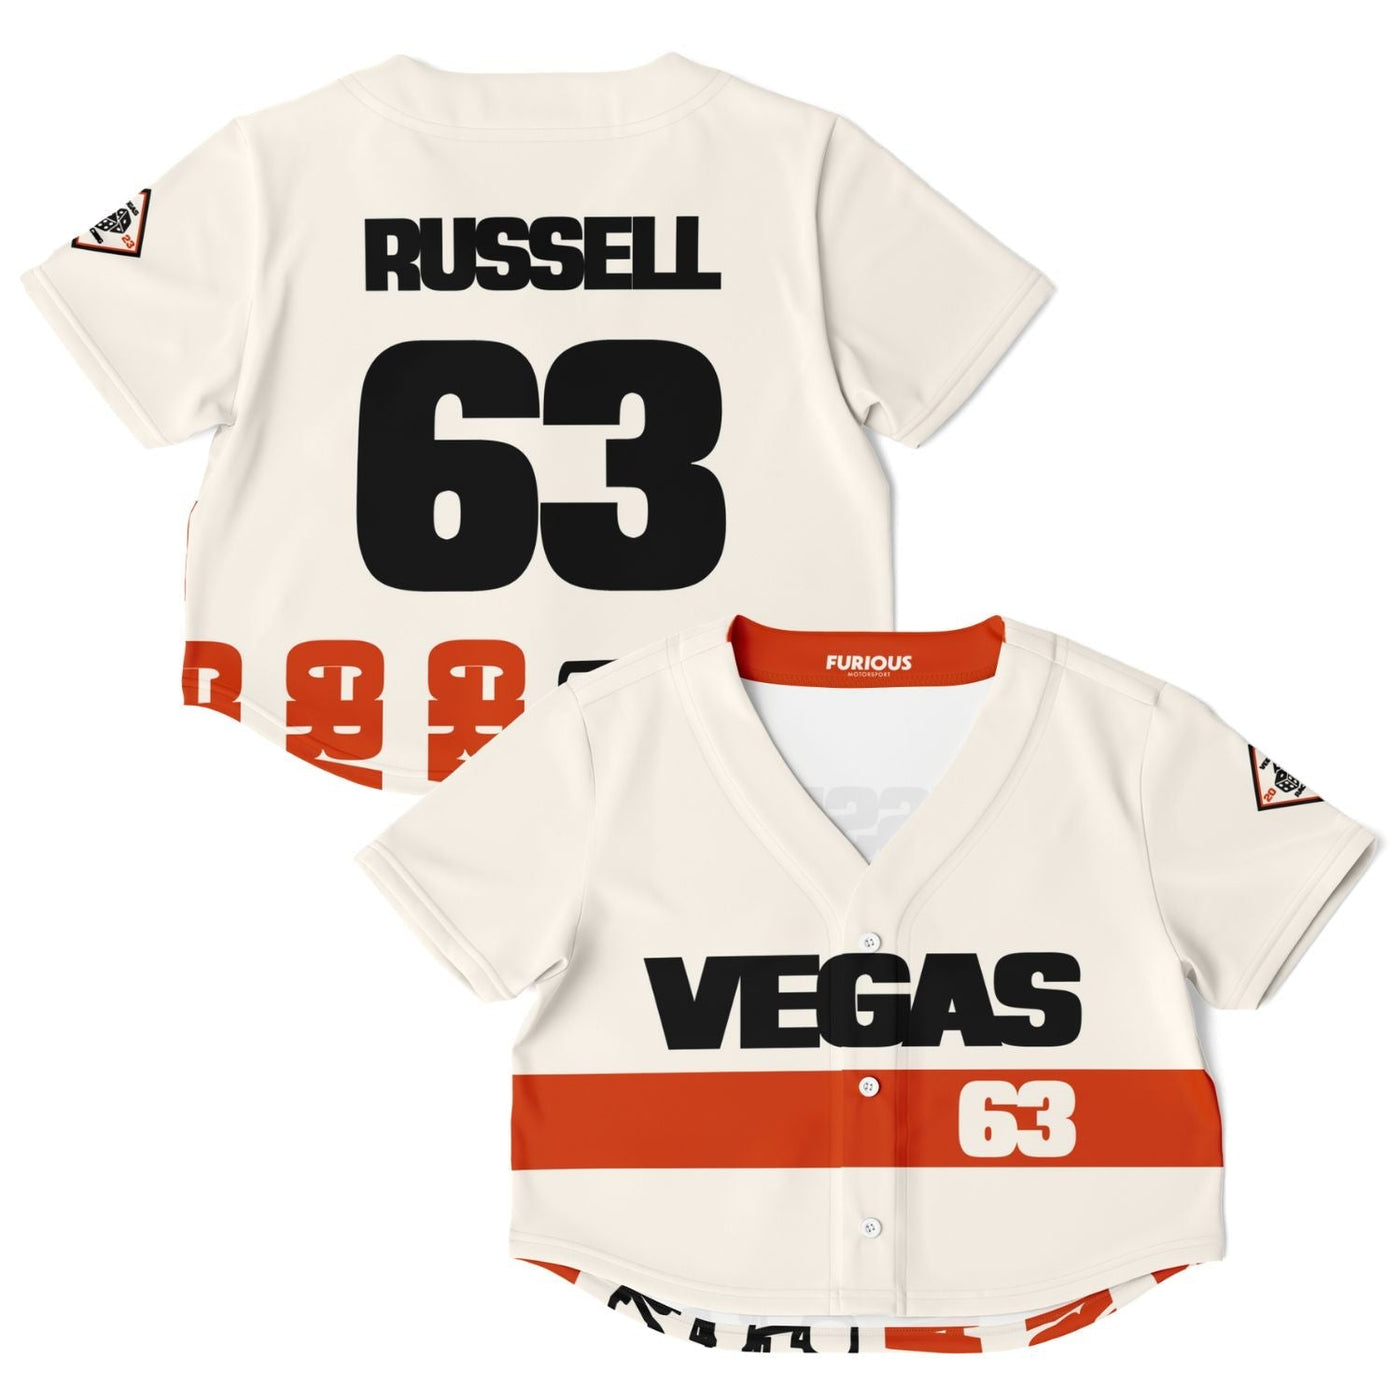 Russell - Vegas Street Circuit Crop Top (Clearance) - Furious Motorsport